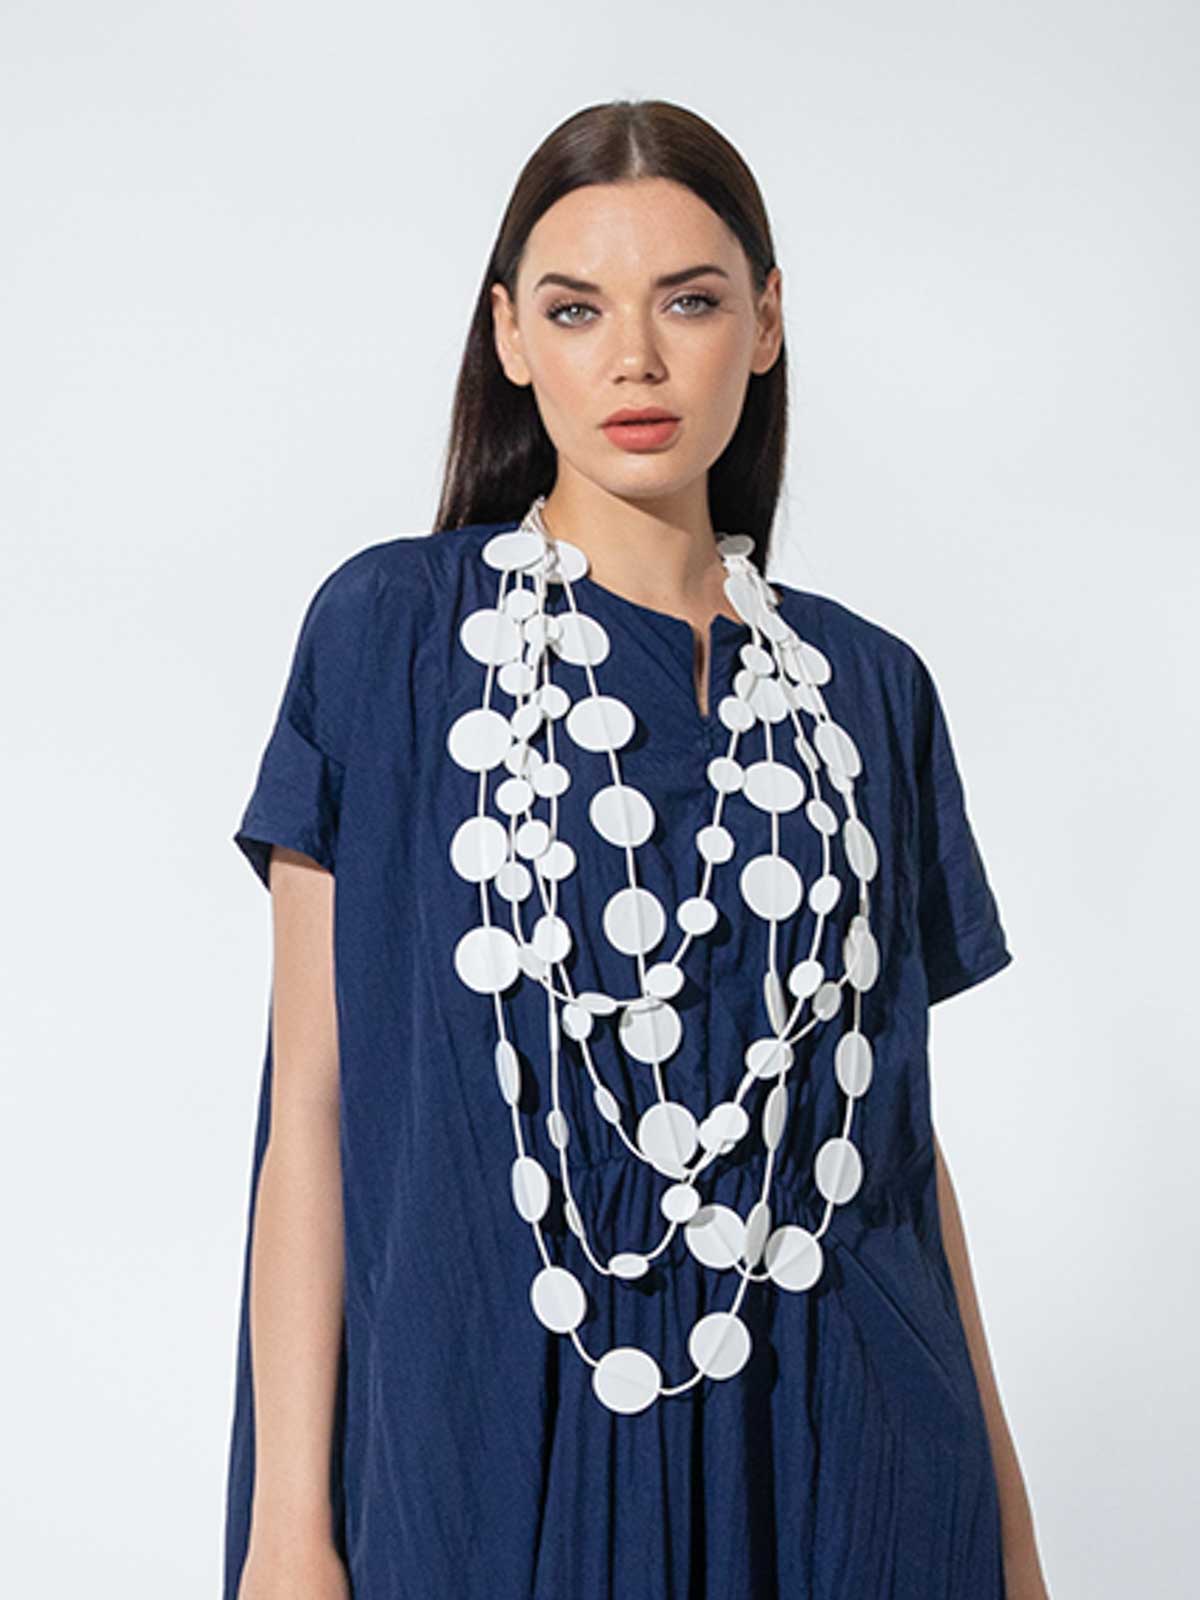 Kozan Harmony Necklace, White - Statement Boutique